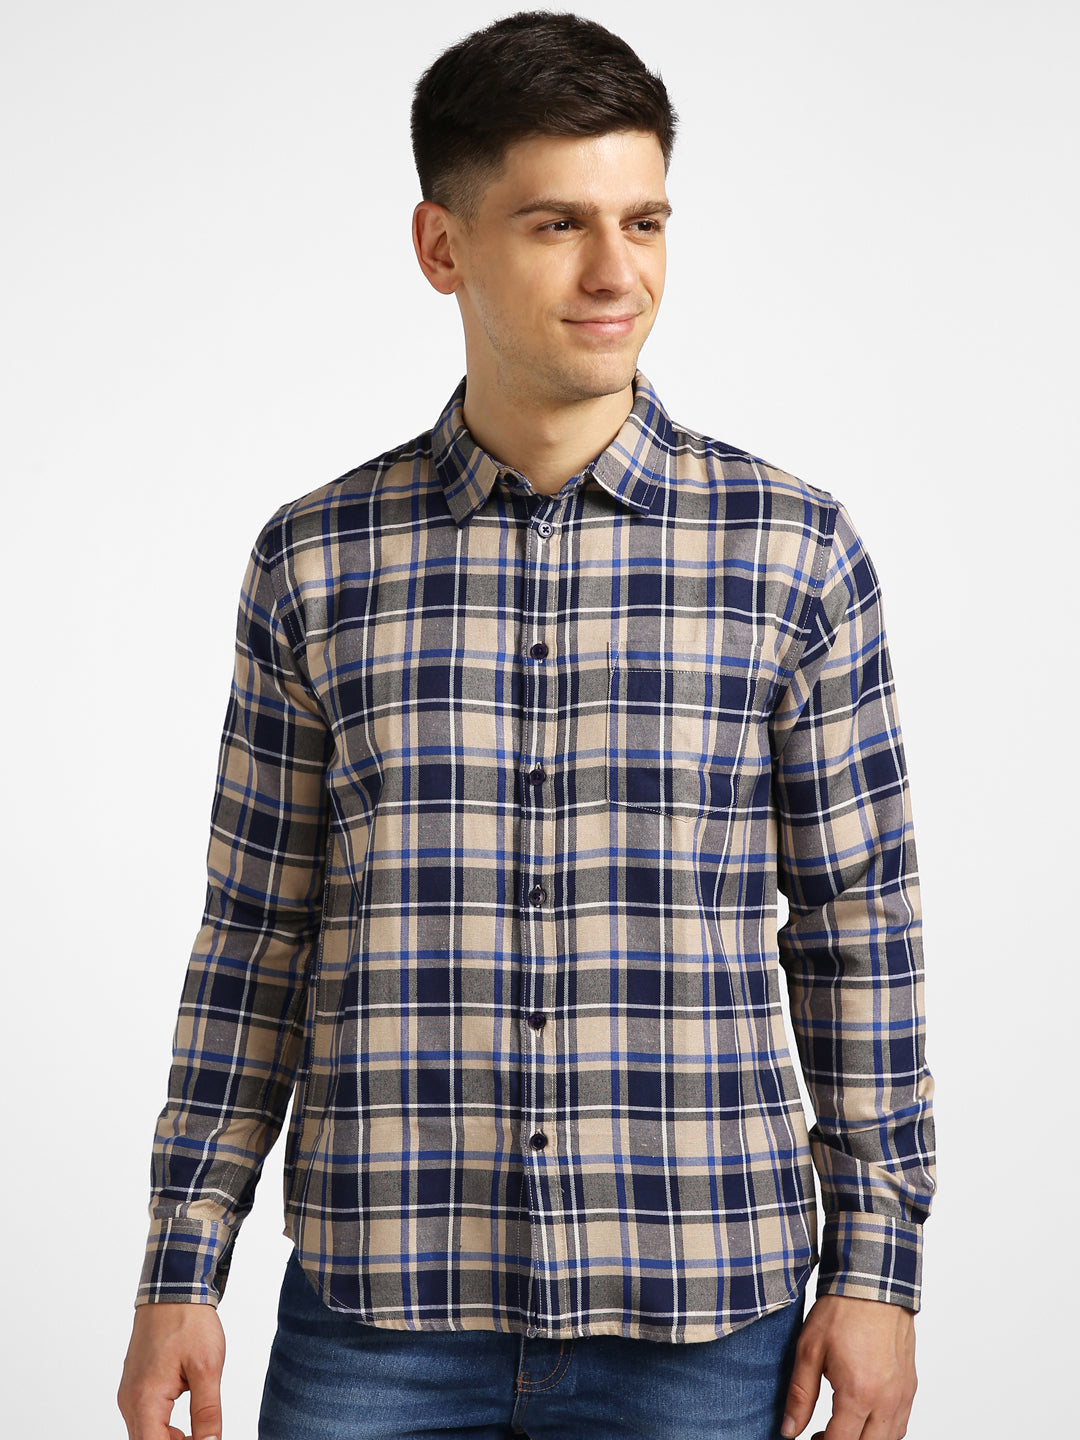 Men's Khaki Cotton Full Sleeve Slim Fit Casual Checkered Shirt